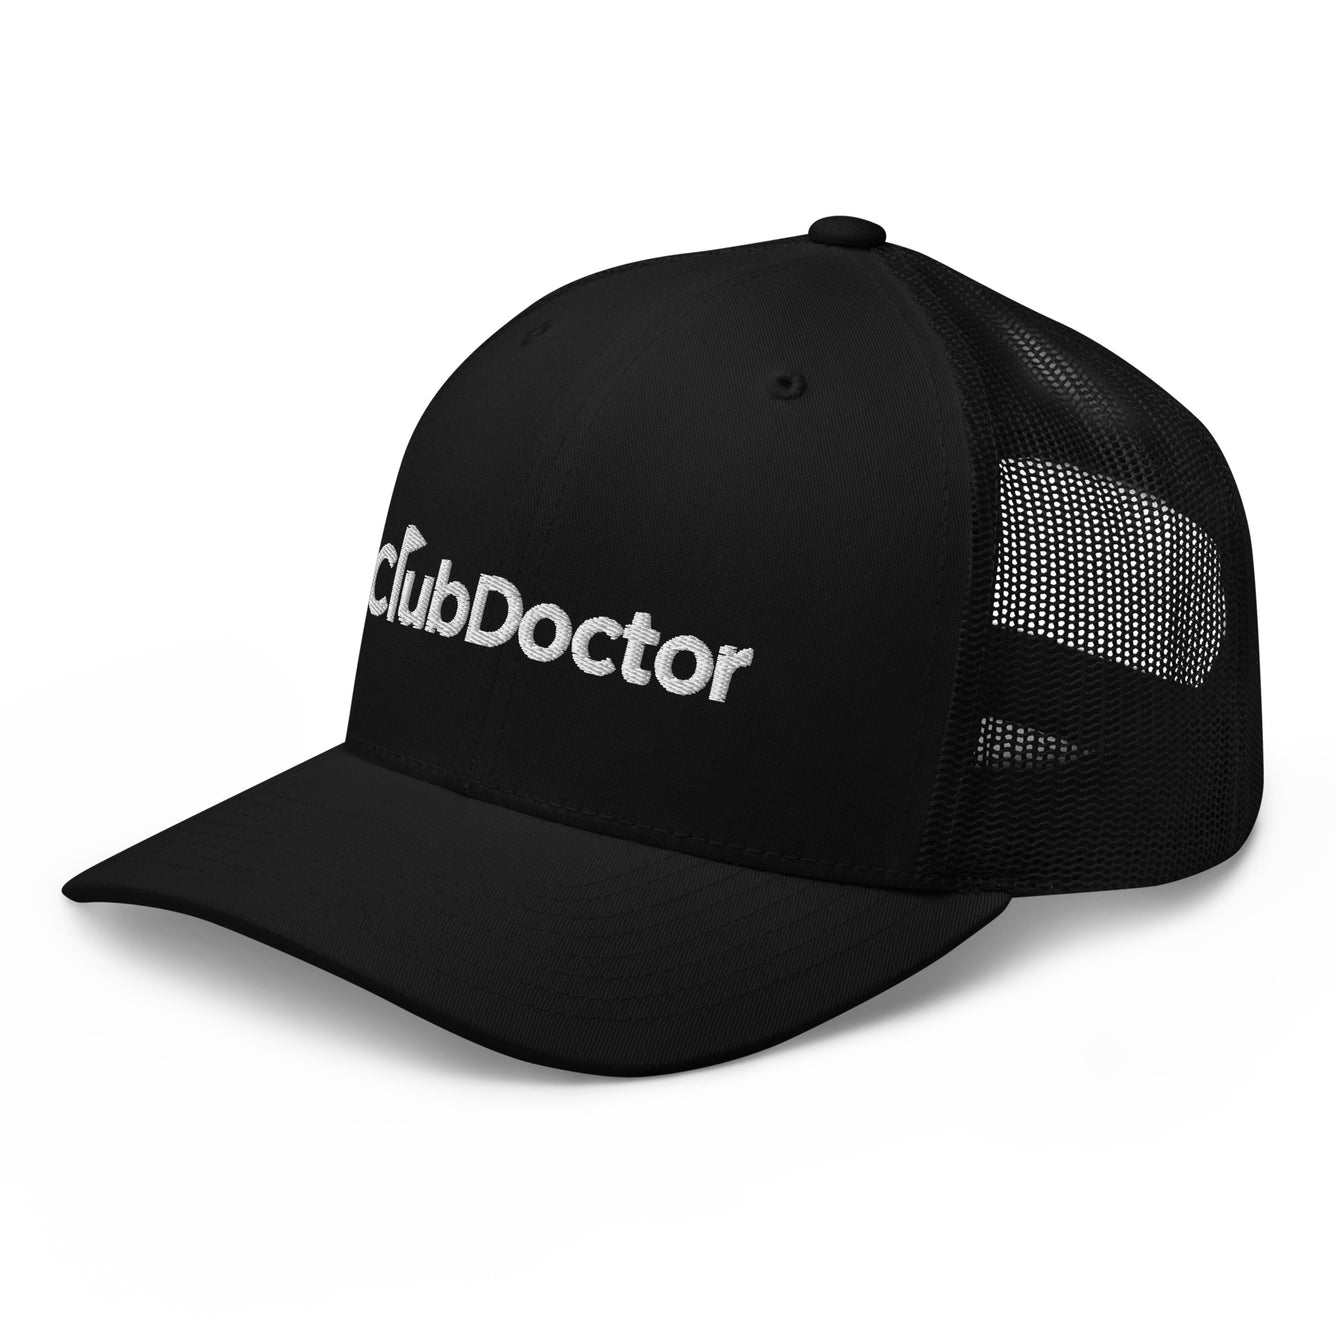 Club Doctor Trucker Cap - Black